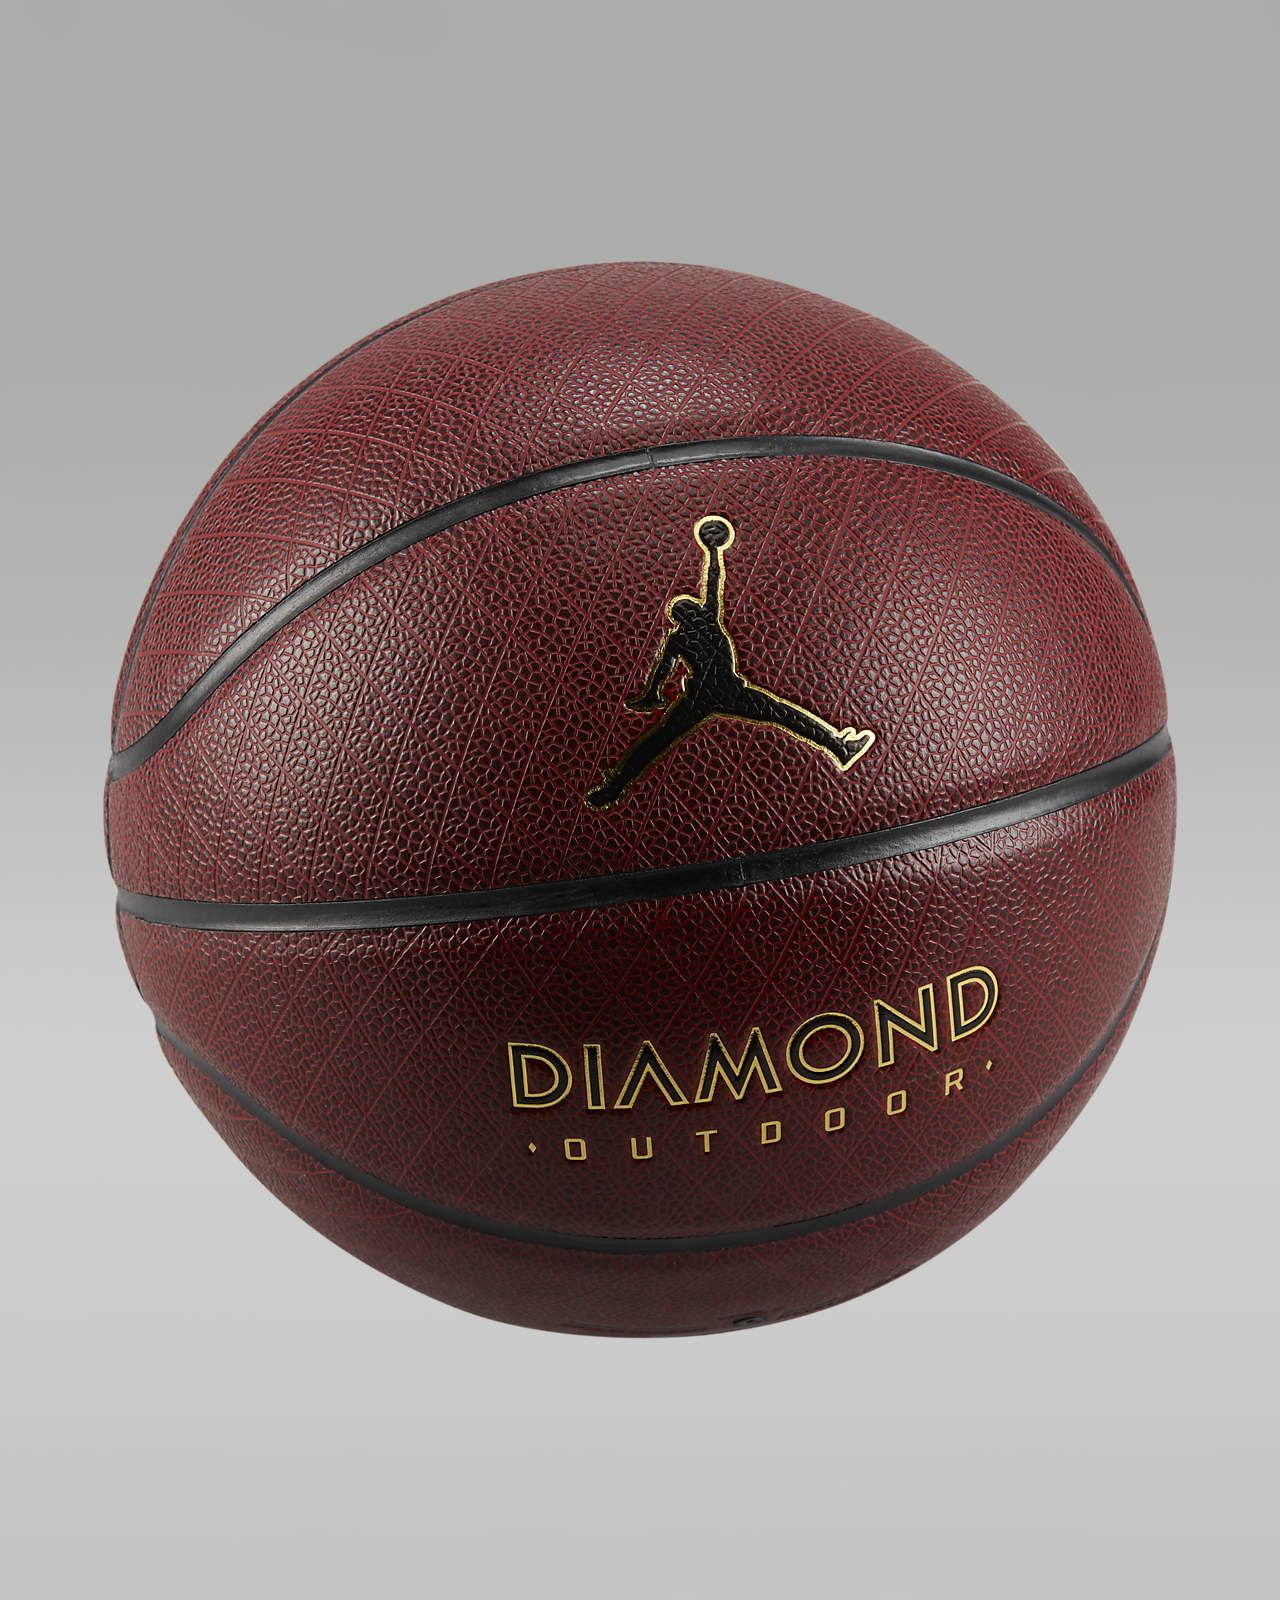 Jordan Diamond Outdoor 8P-basketball